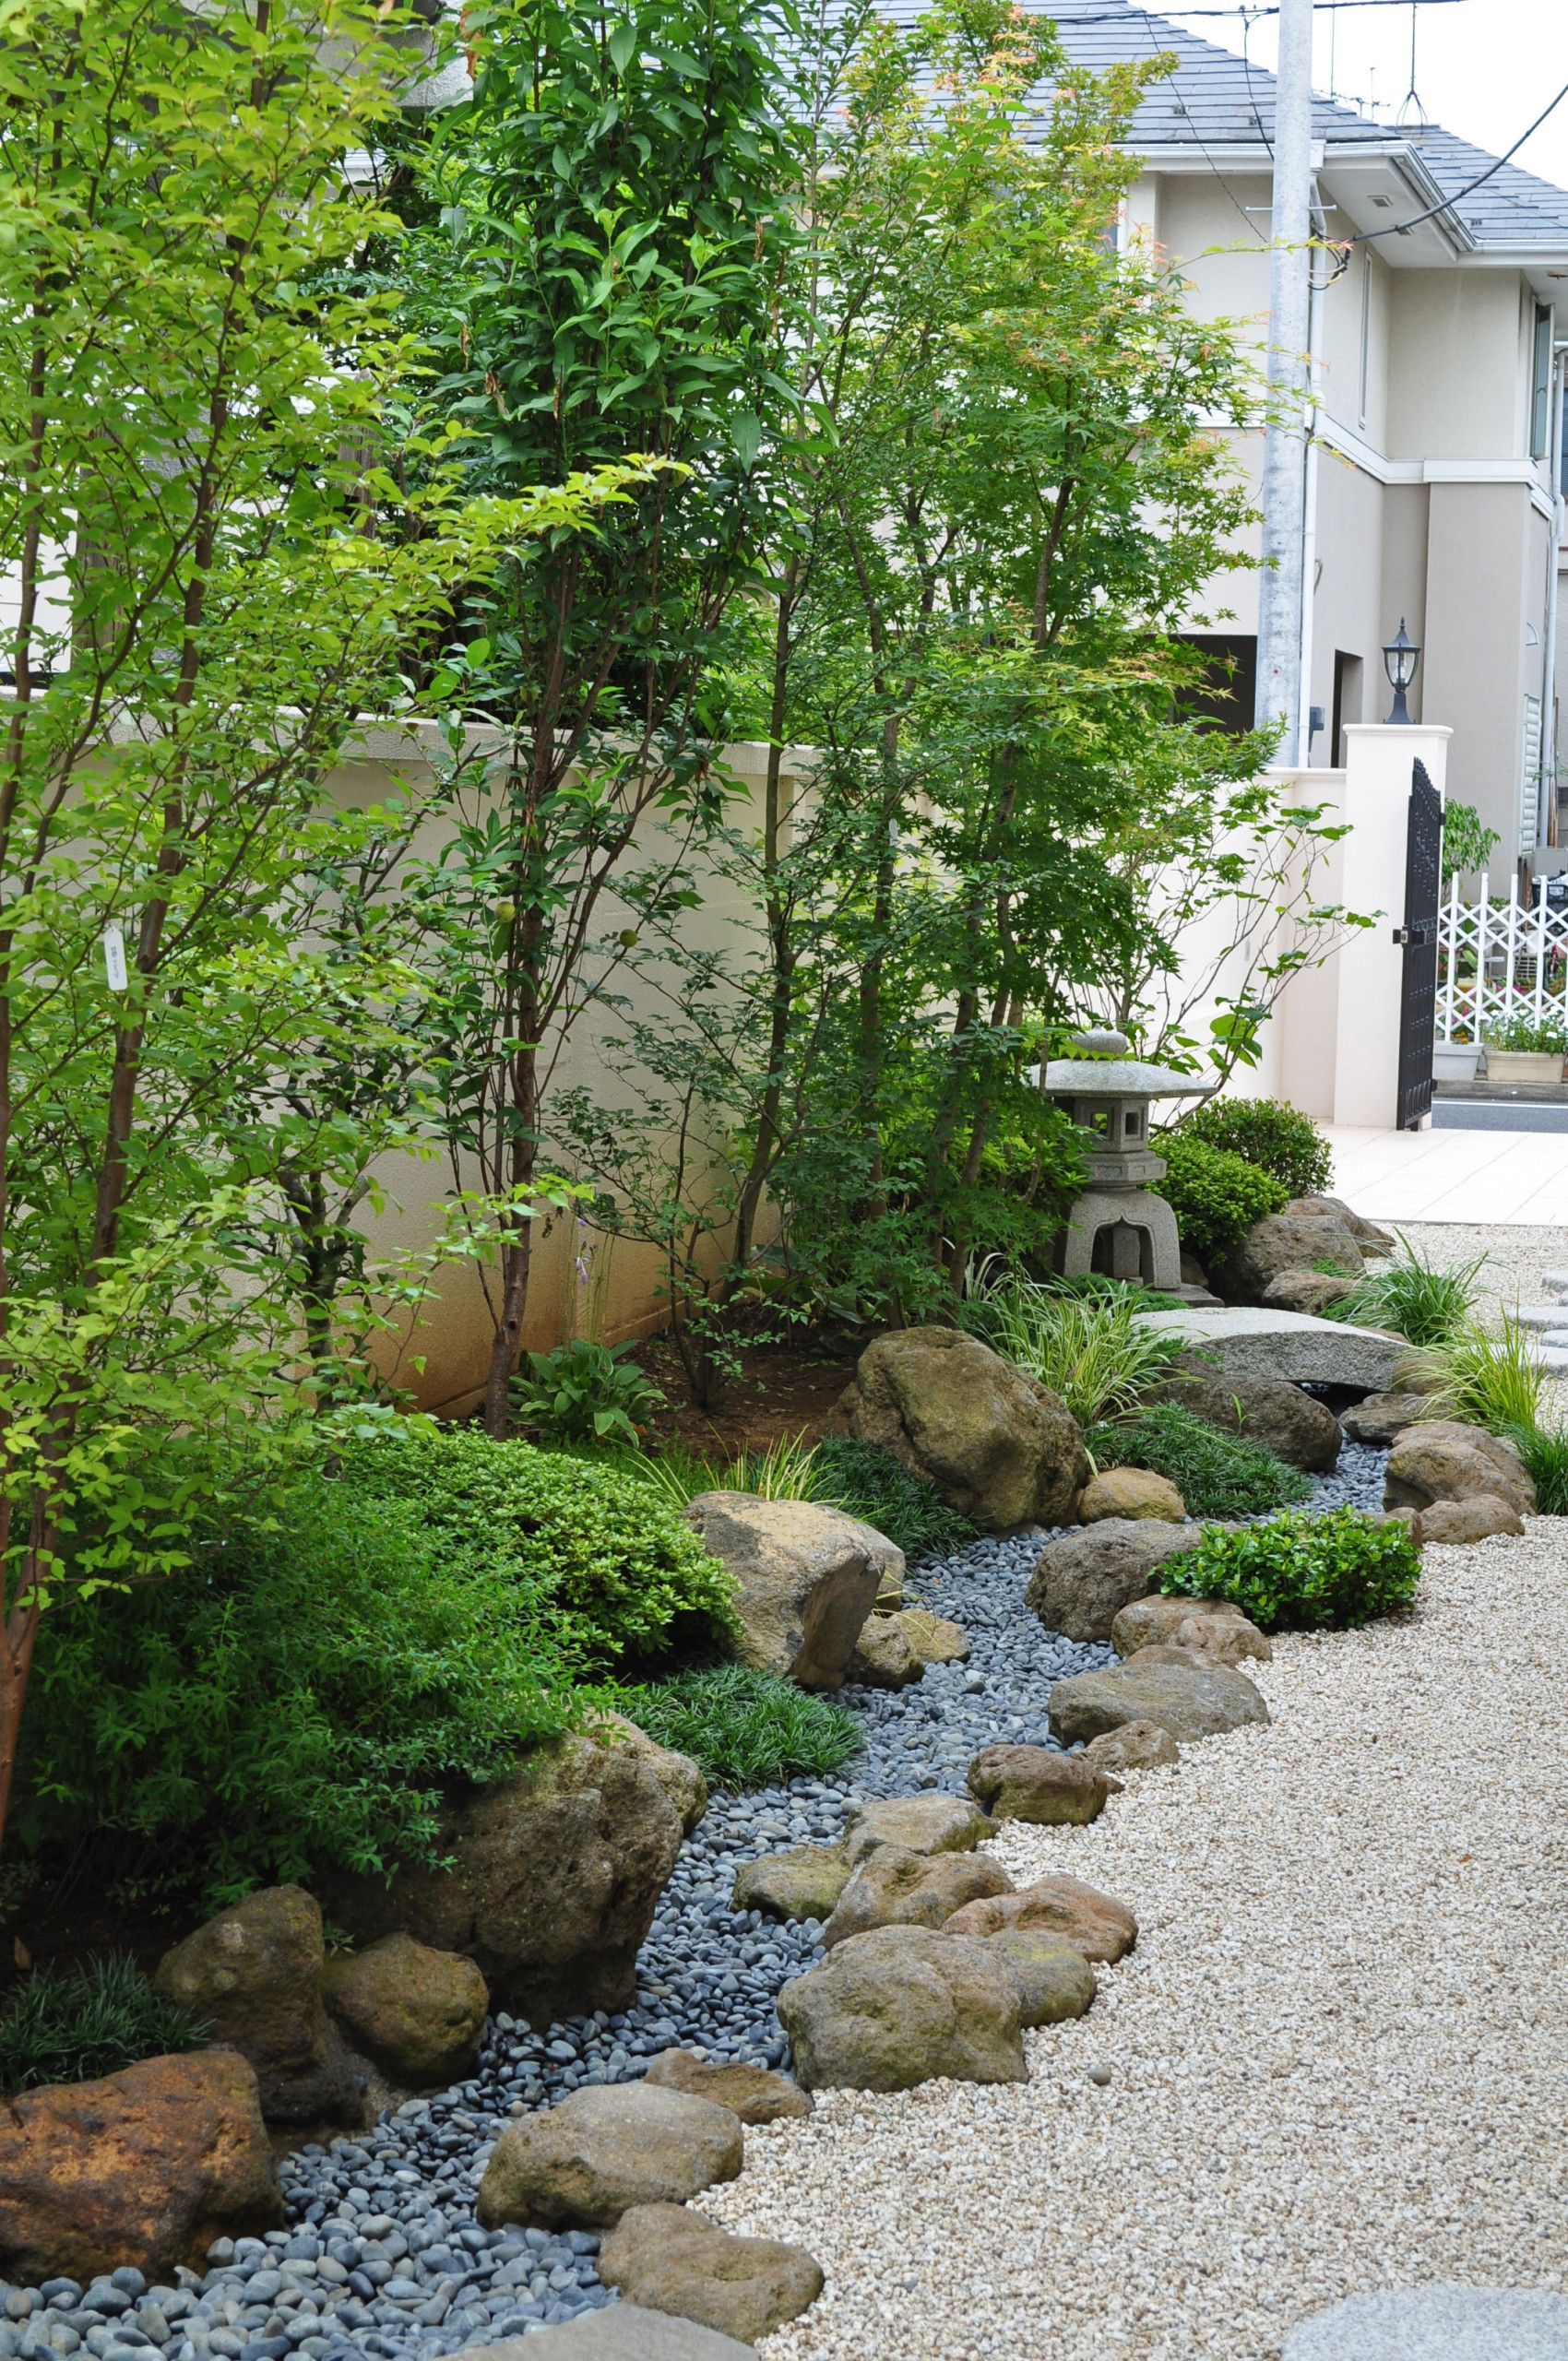 Creating a Peaceful Outdoor Oasis: Zen Garden Inspiration for Your Backyard